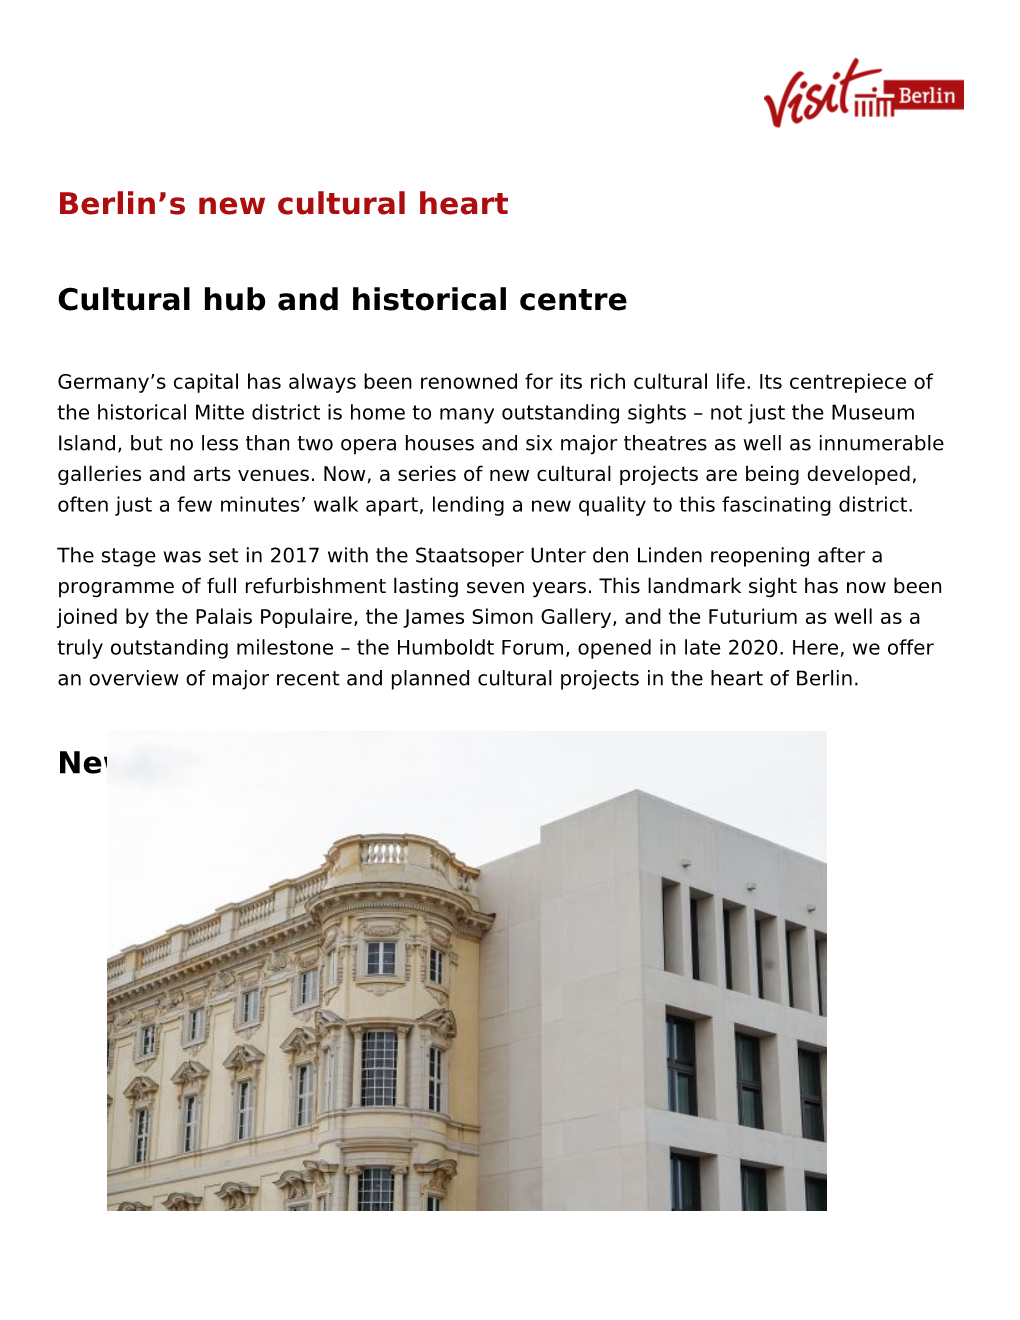 Berlin's New Cultural Heart